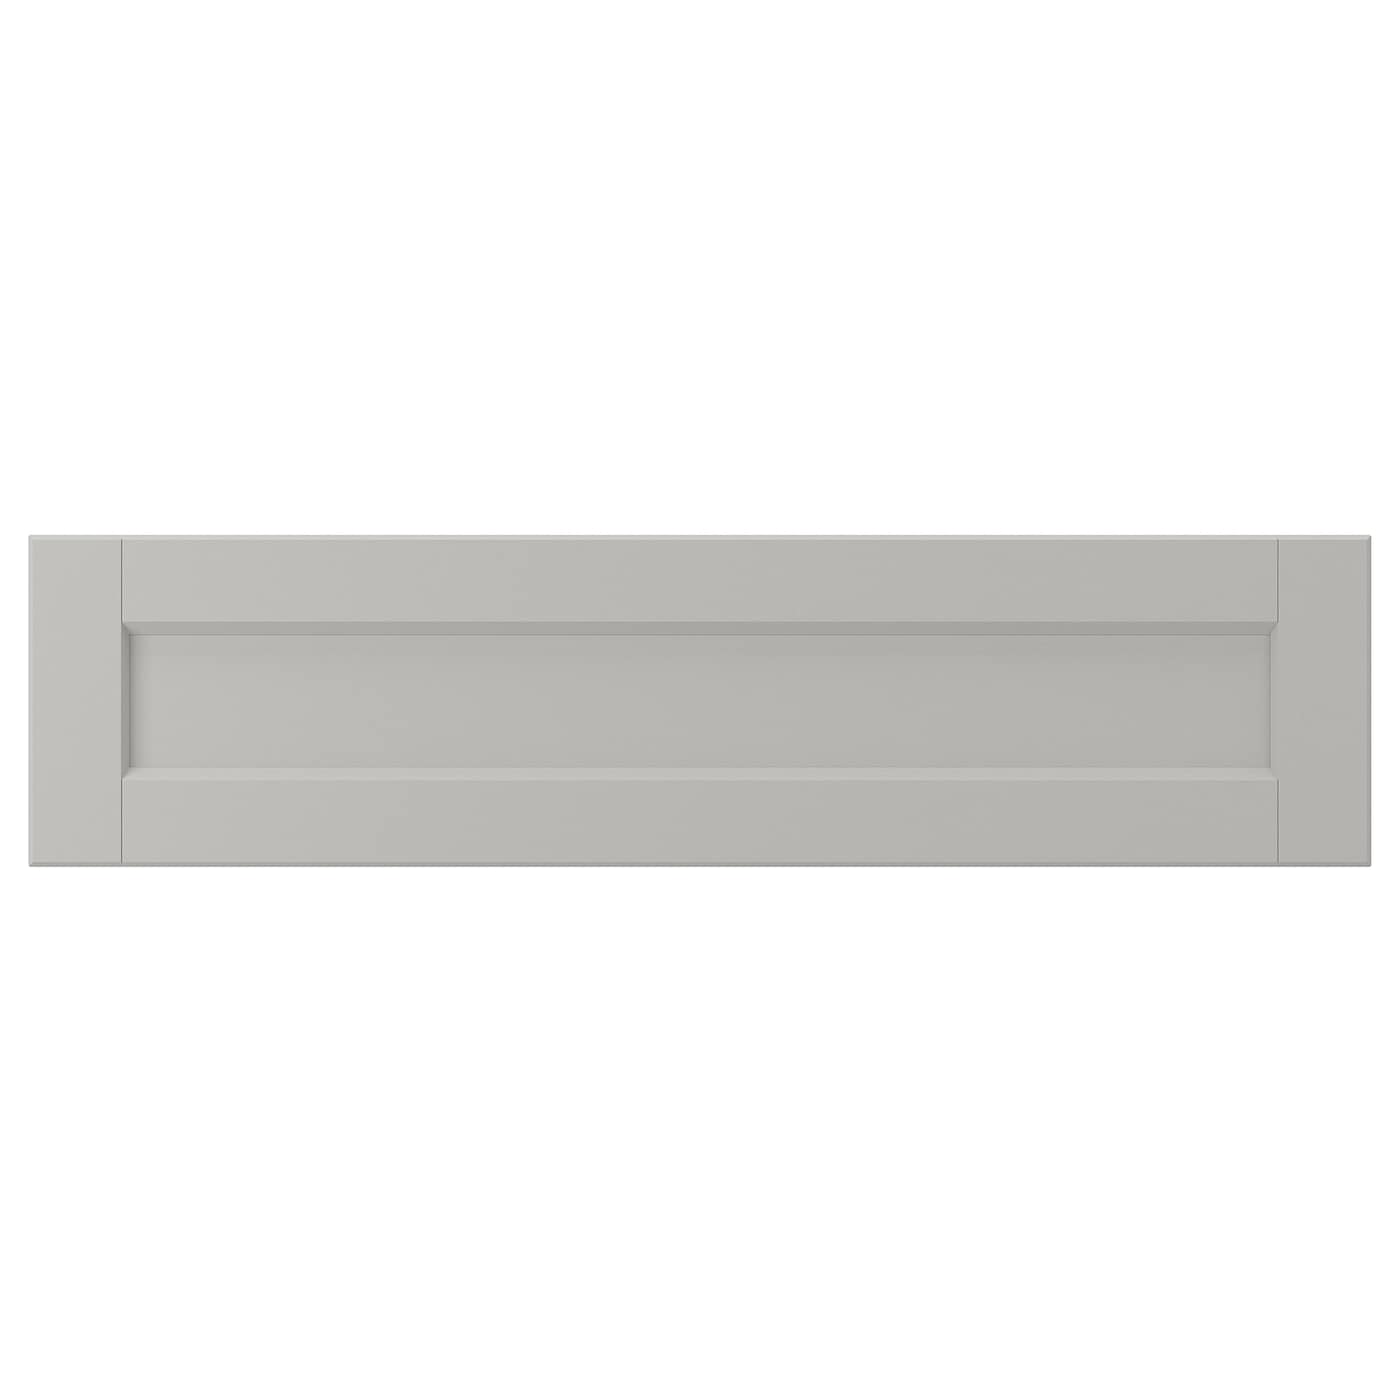 Фасад ящика - IKEA LERHYTTAN, 20х80 см, светло-серый, ЛЕРХЮТТАН ИКЕА